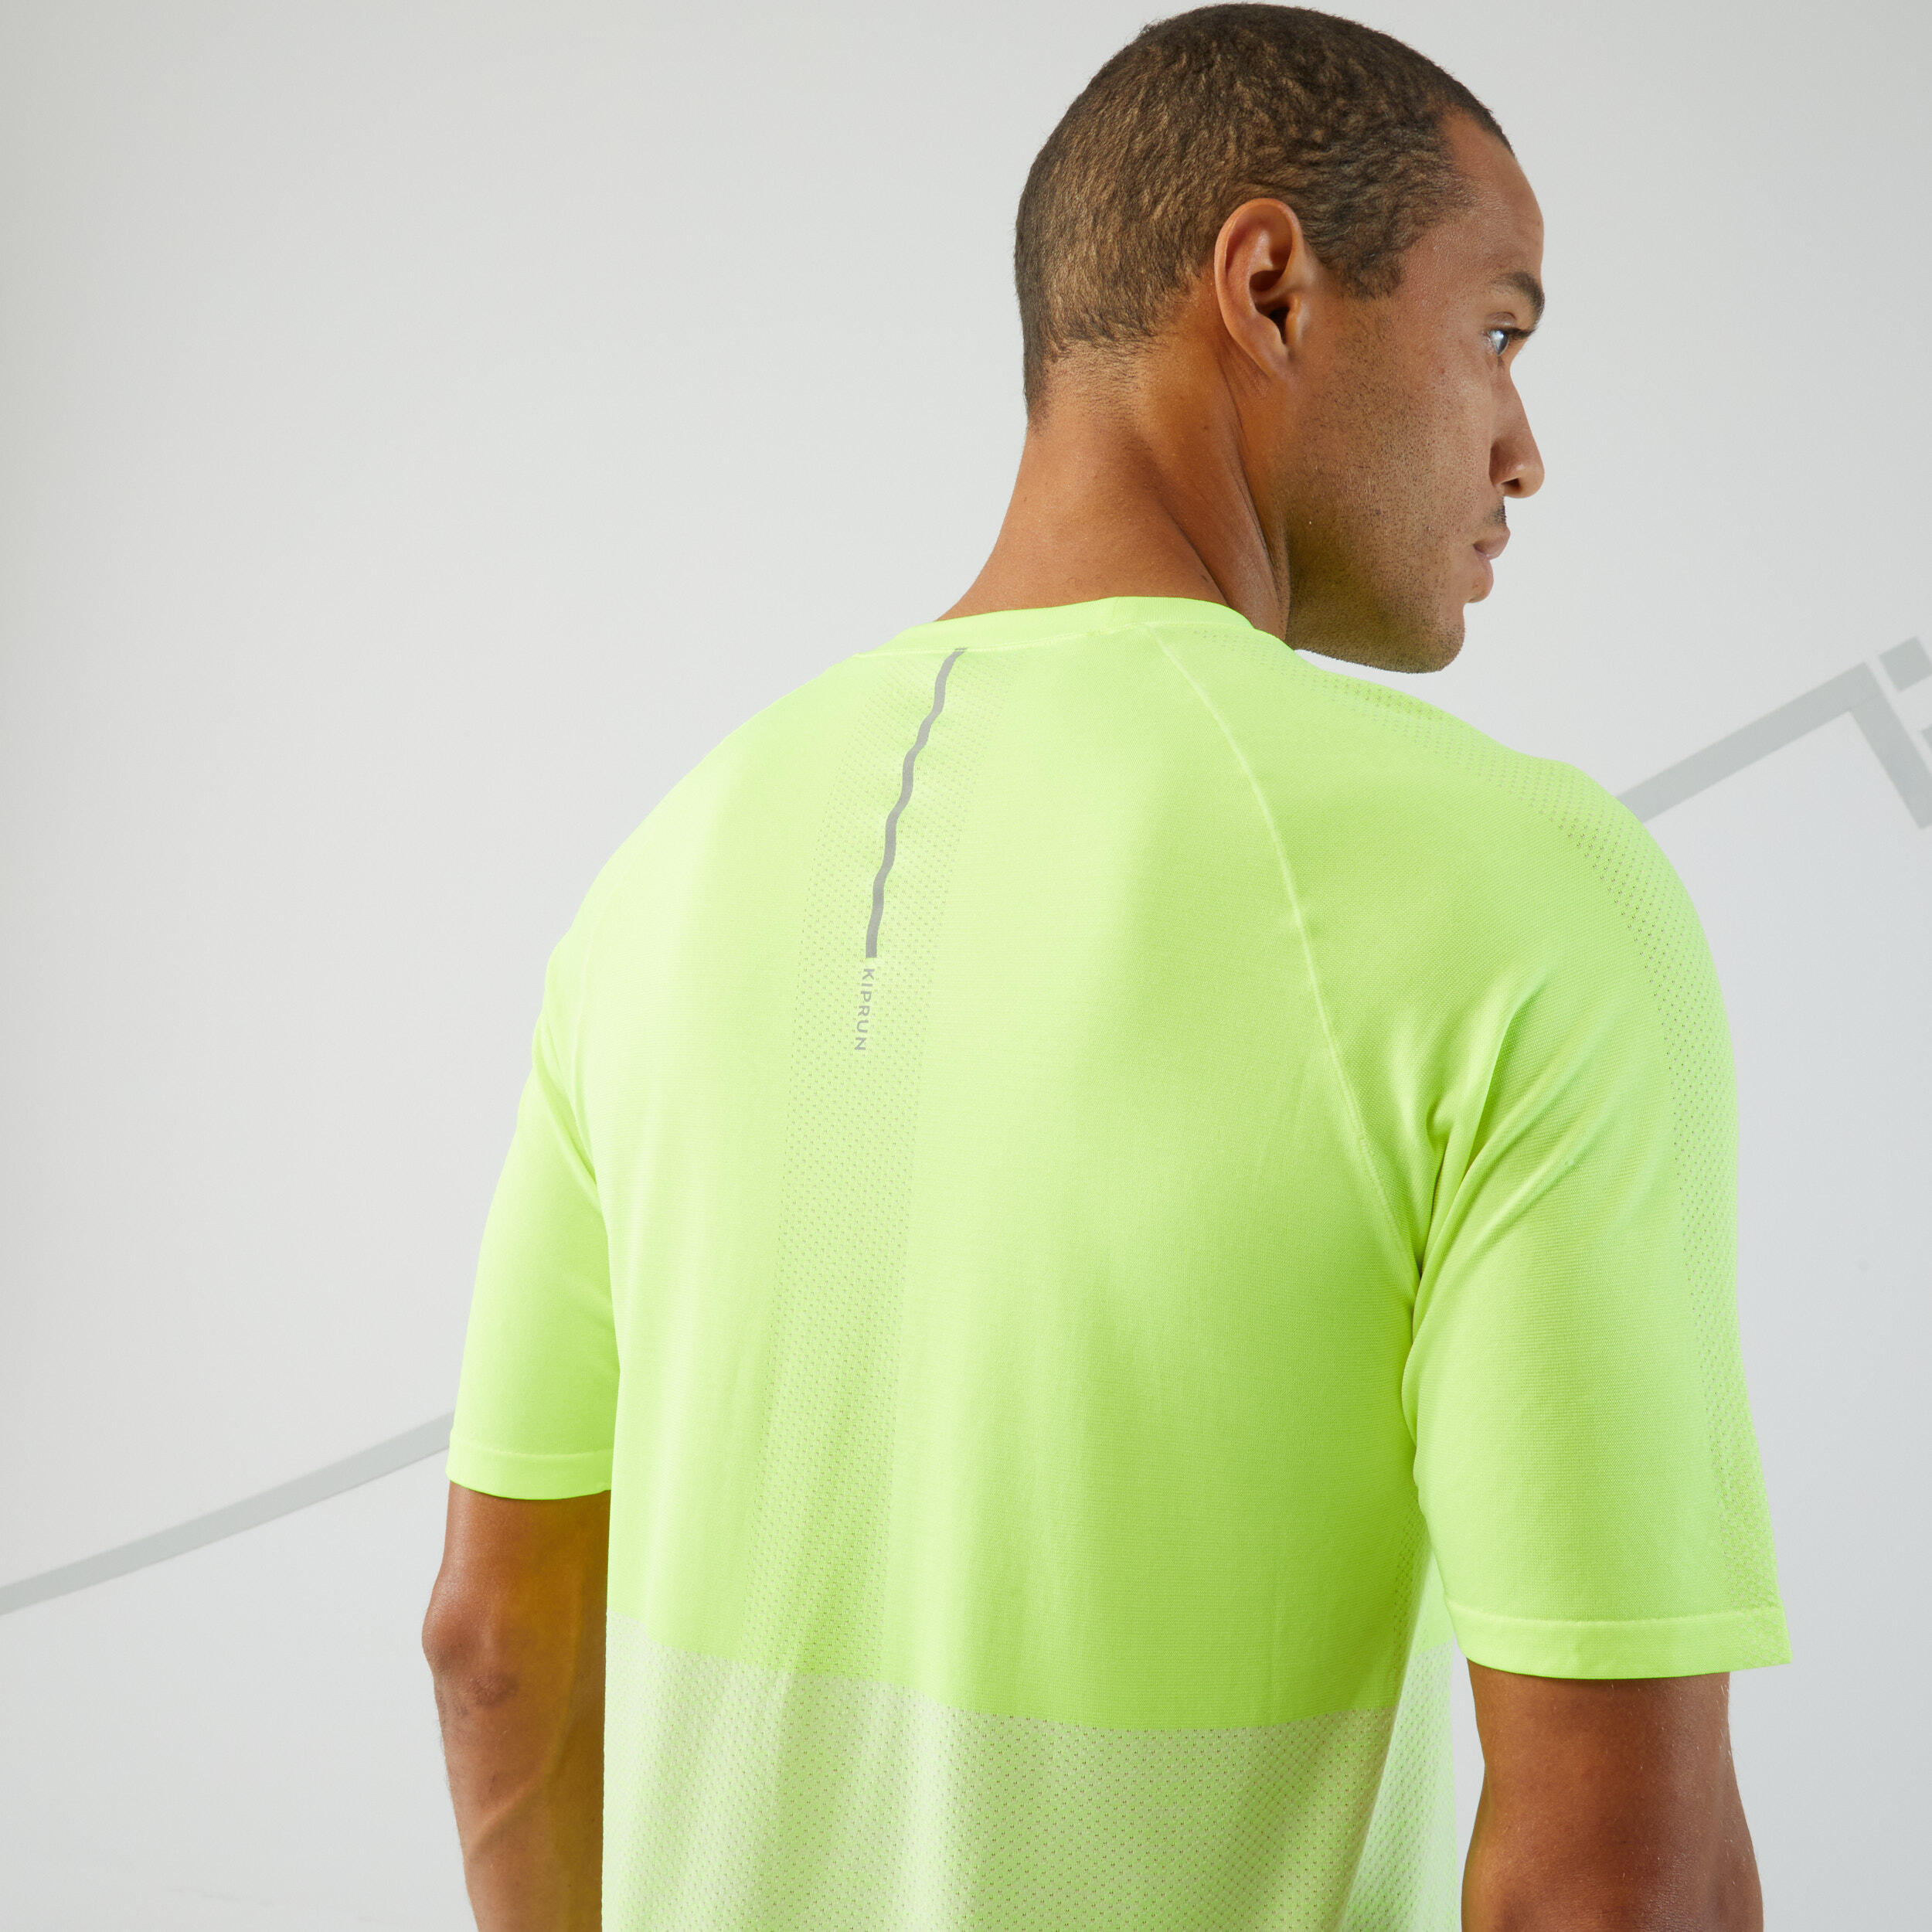 Dry Men's Breathable Running T-Shirt - Yellow 5/6